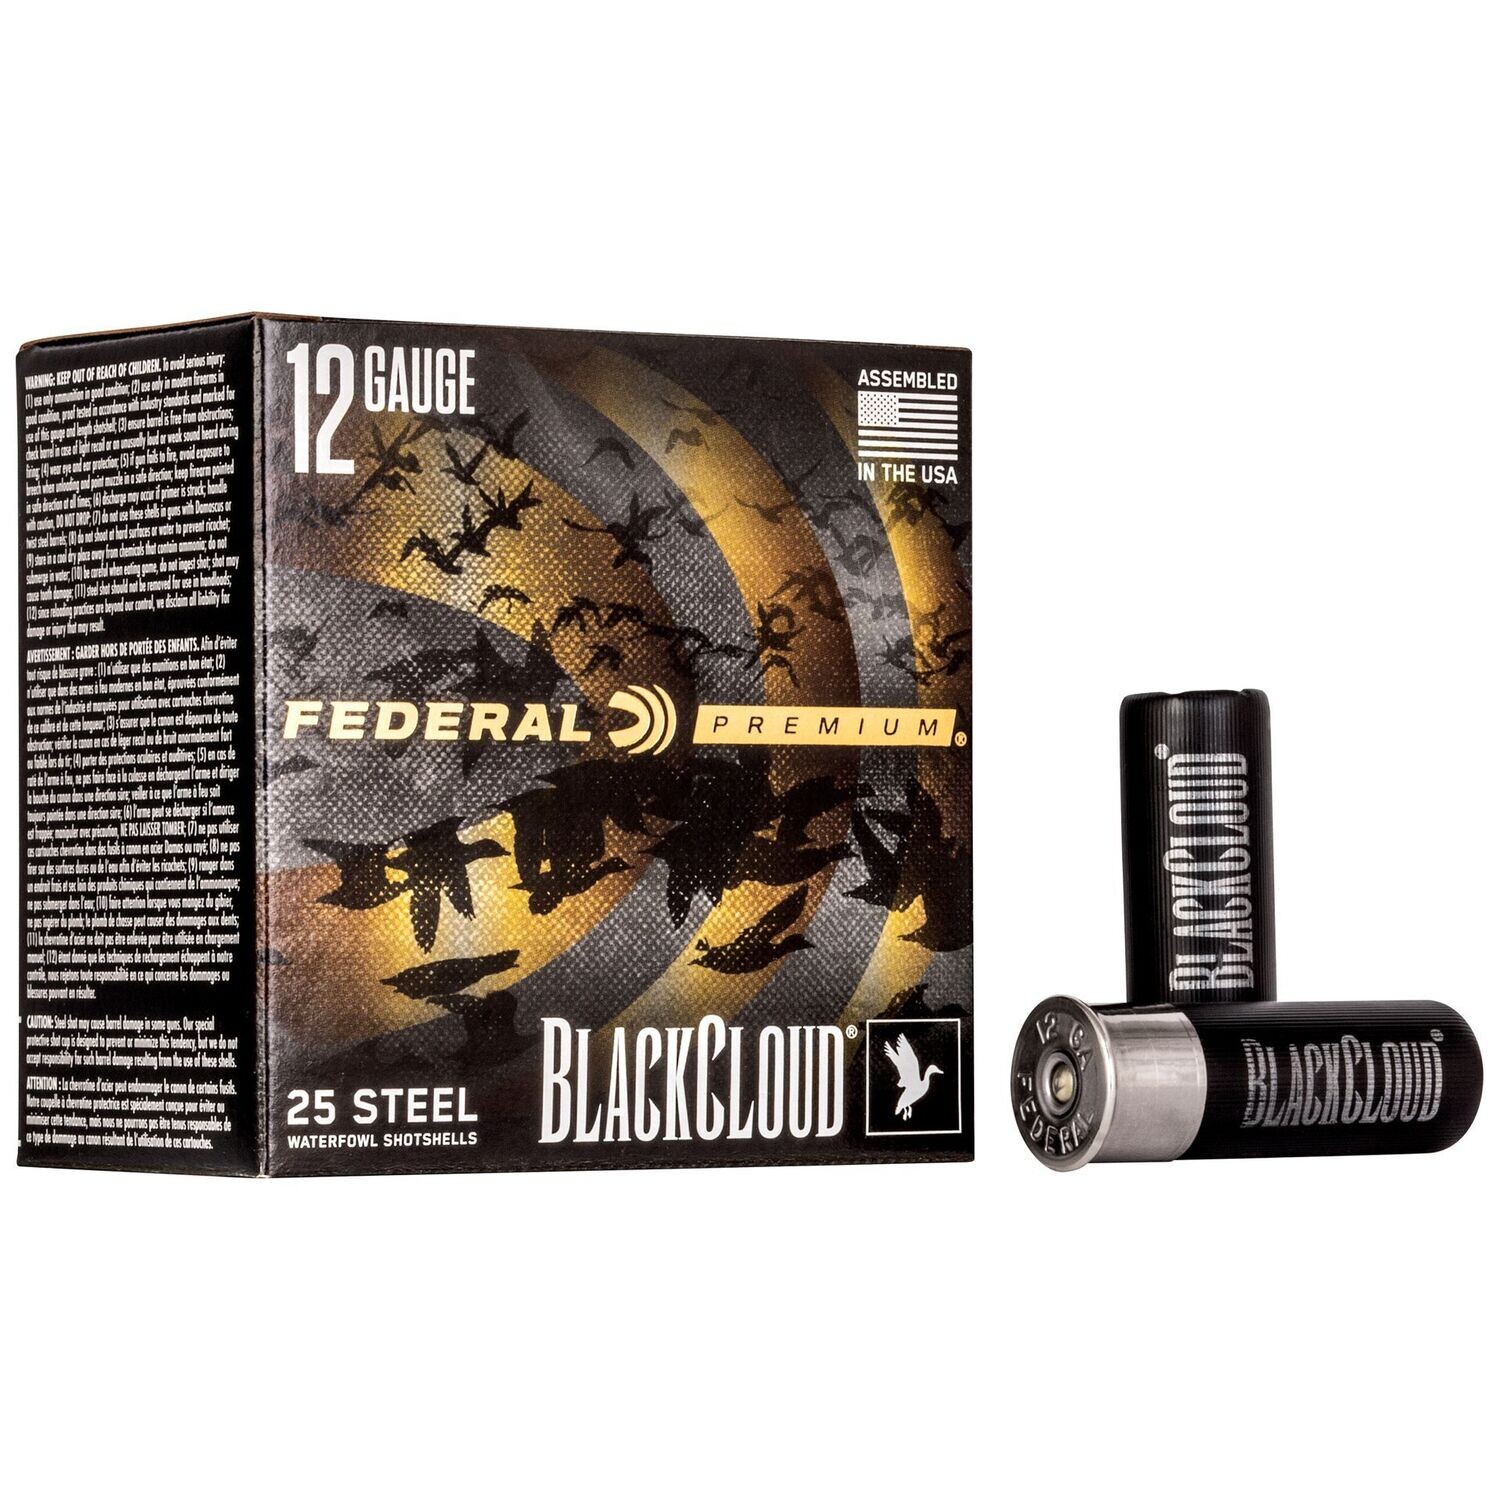 Federal, Premium, Black Cloud FS Steel with Flightcontrol Flex Wad, 12 Gauge 2.75